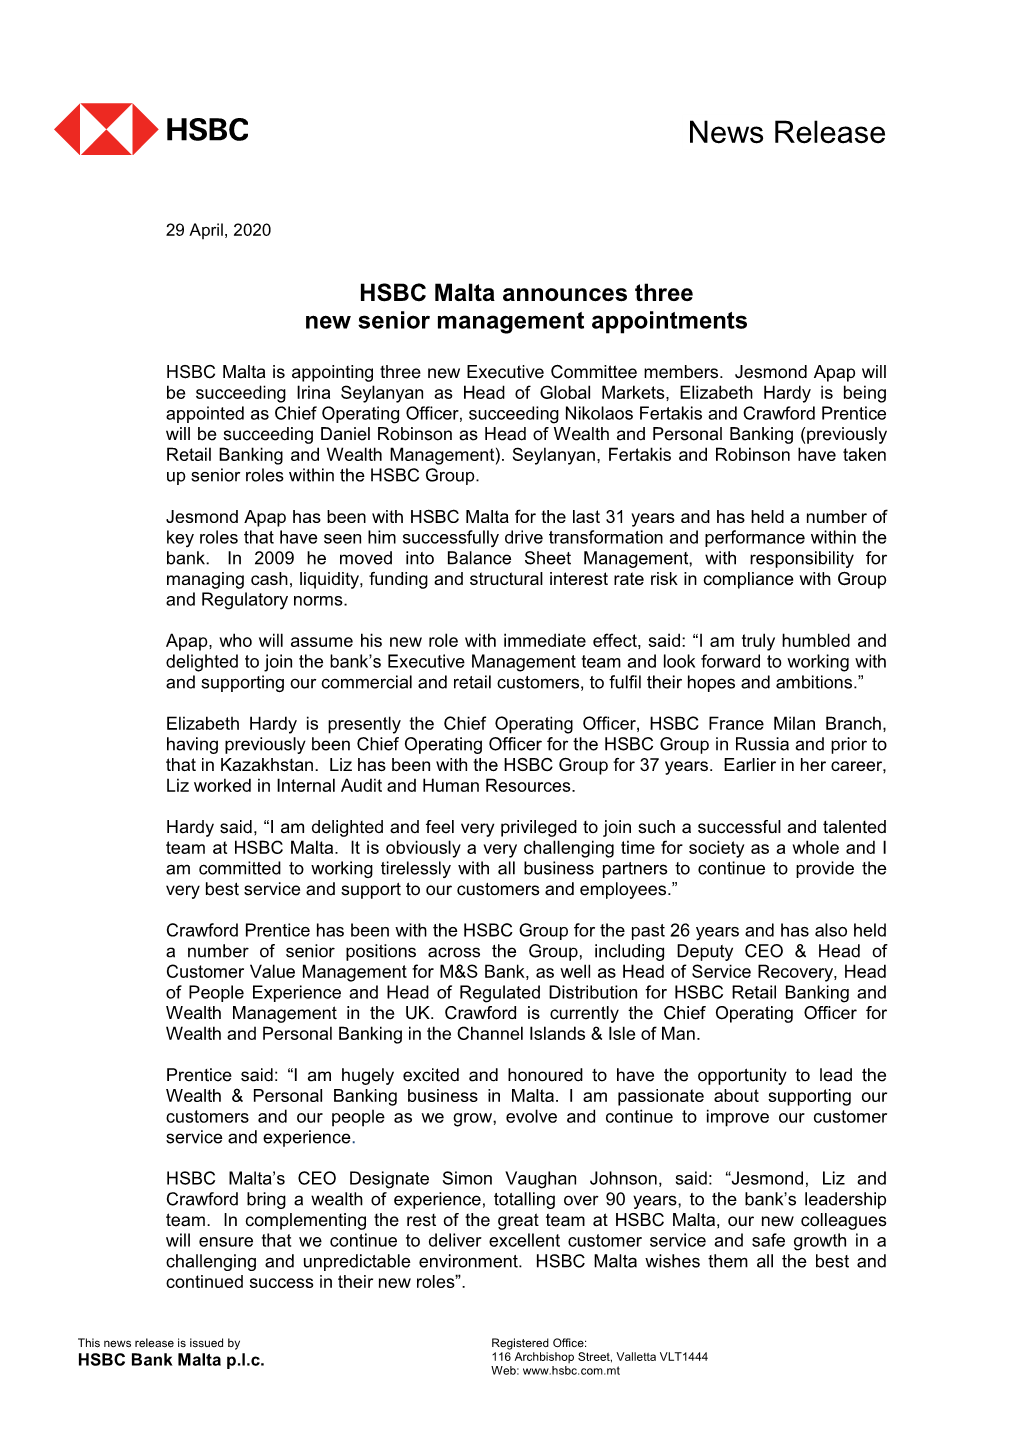 HSBC Malta Announces Three New Senior Management Appointments